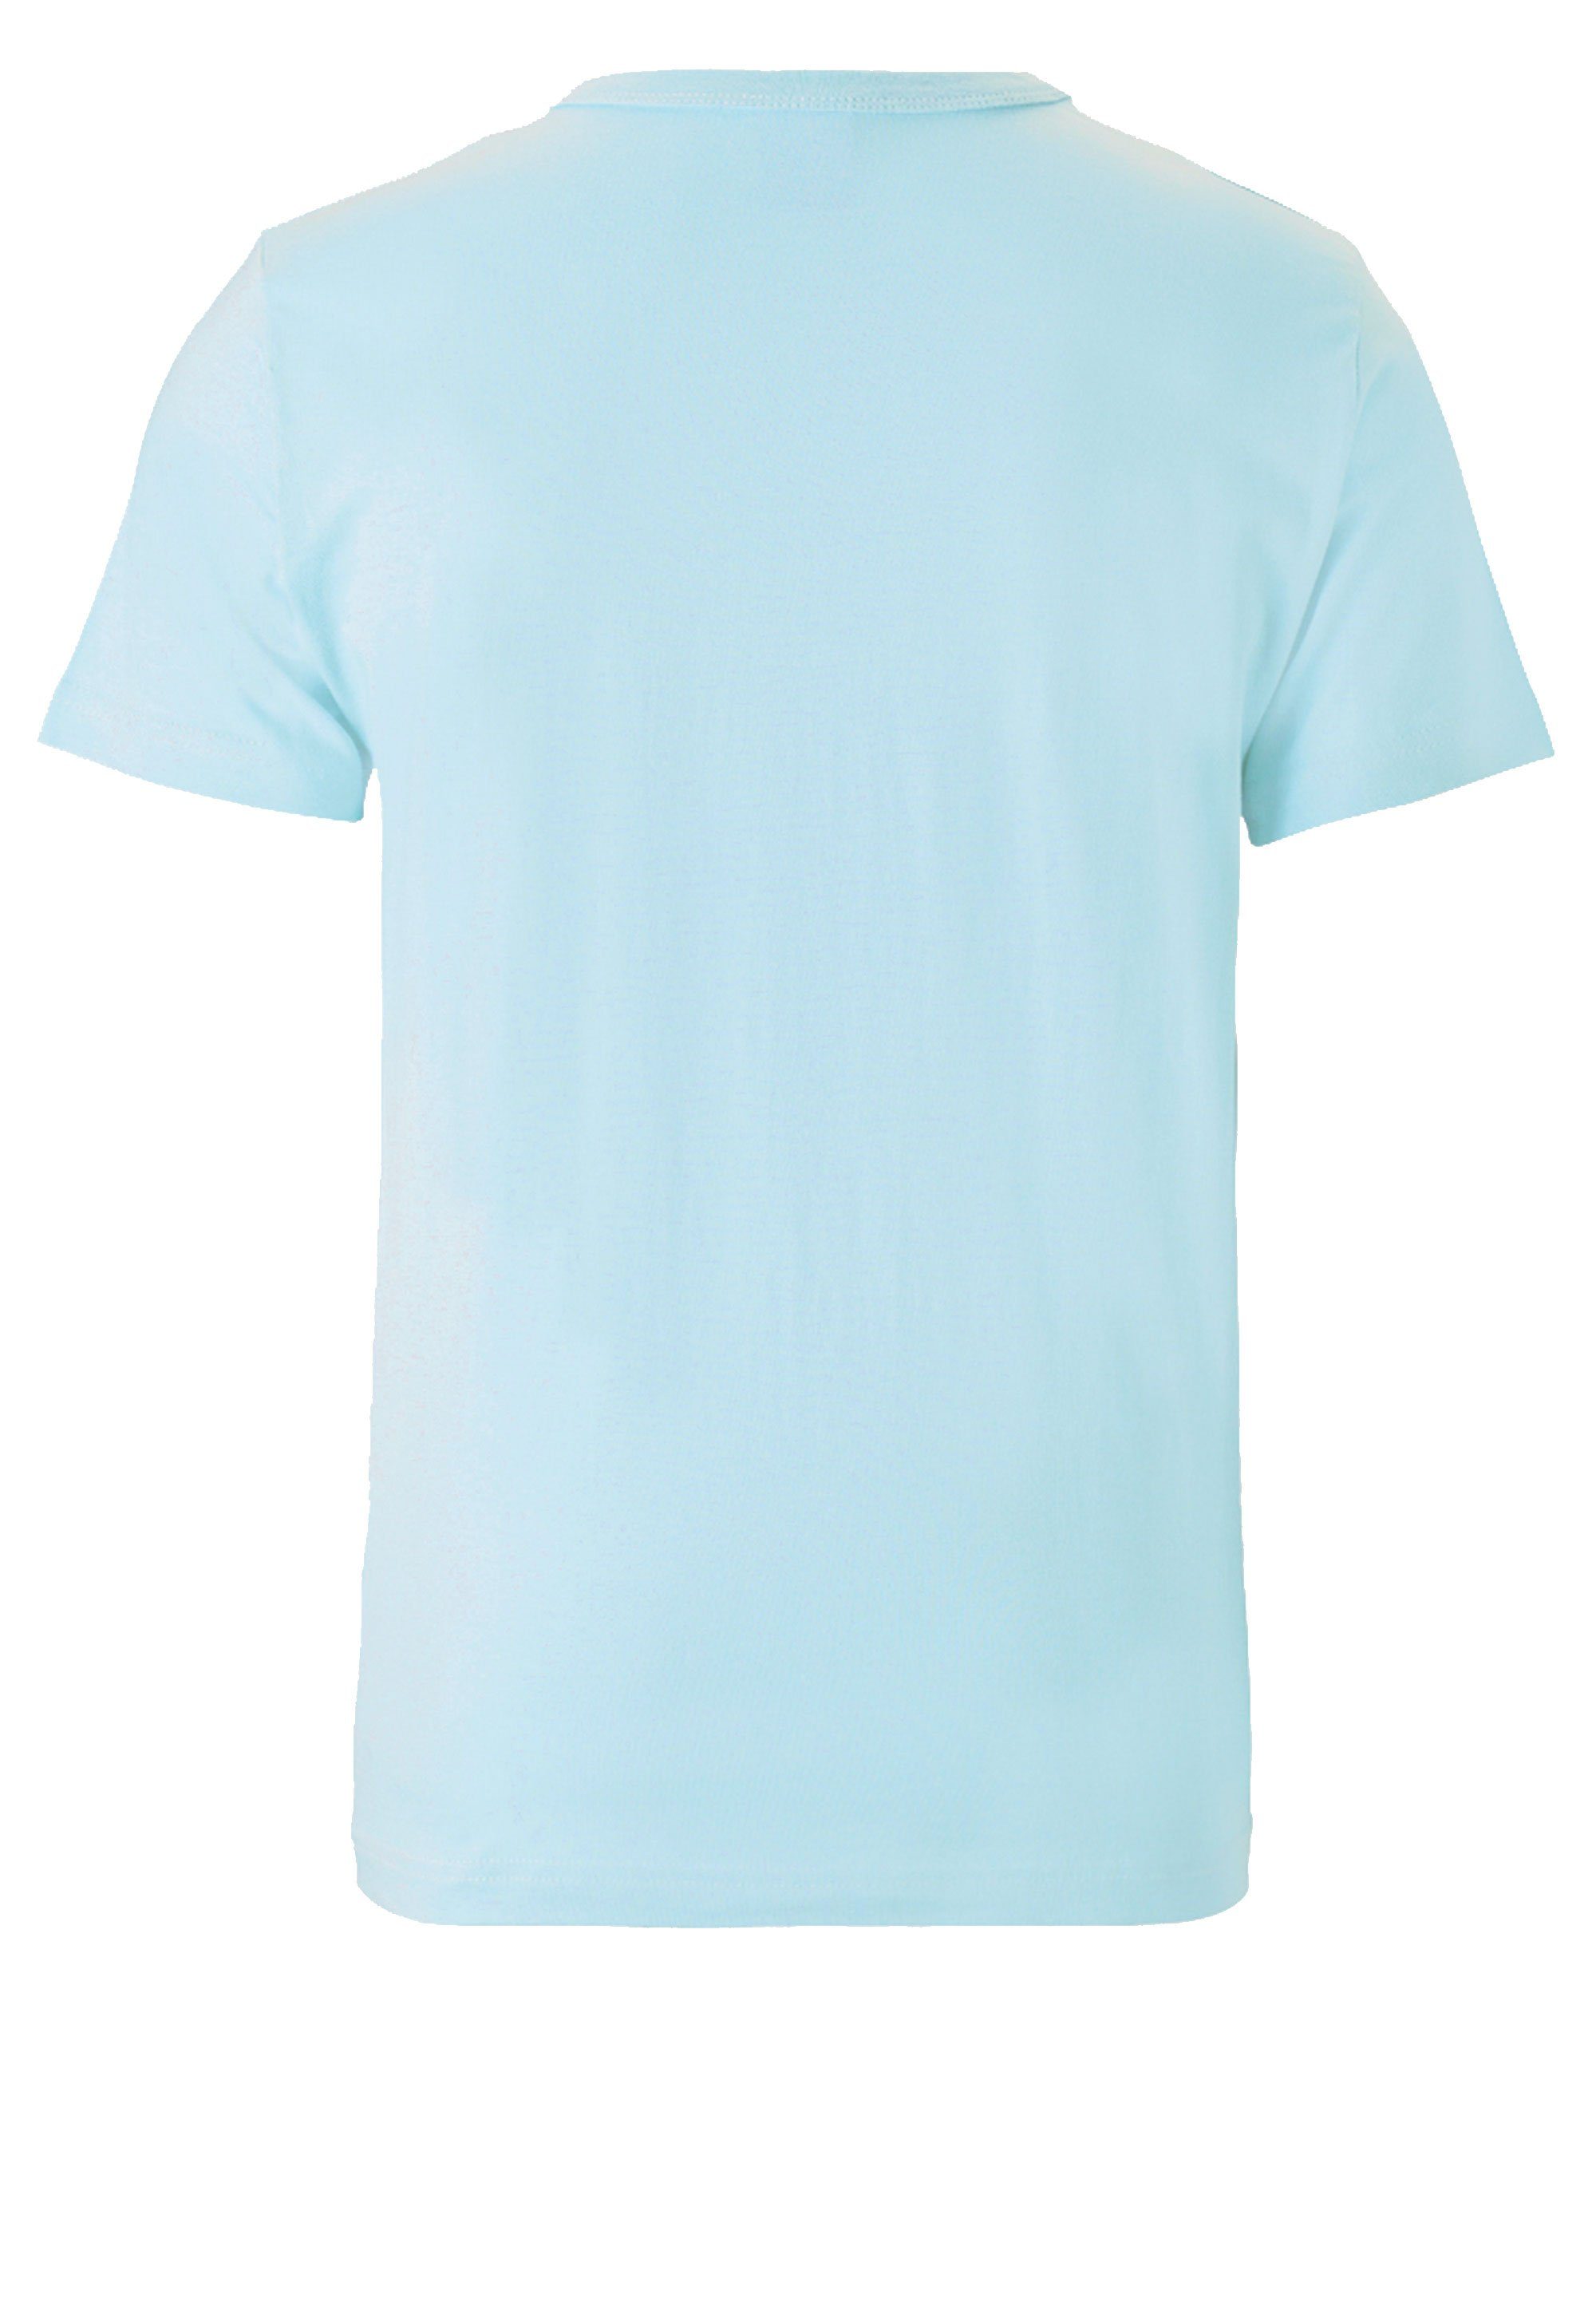 T-Shirt hellblau Sesamstrasse mit Originalddesign - lizenziertem LOGOSHIRT Krümelmonster